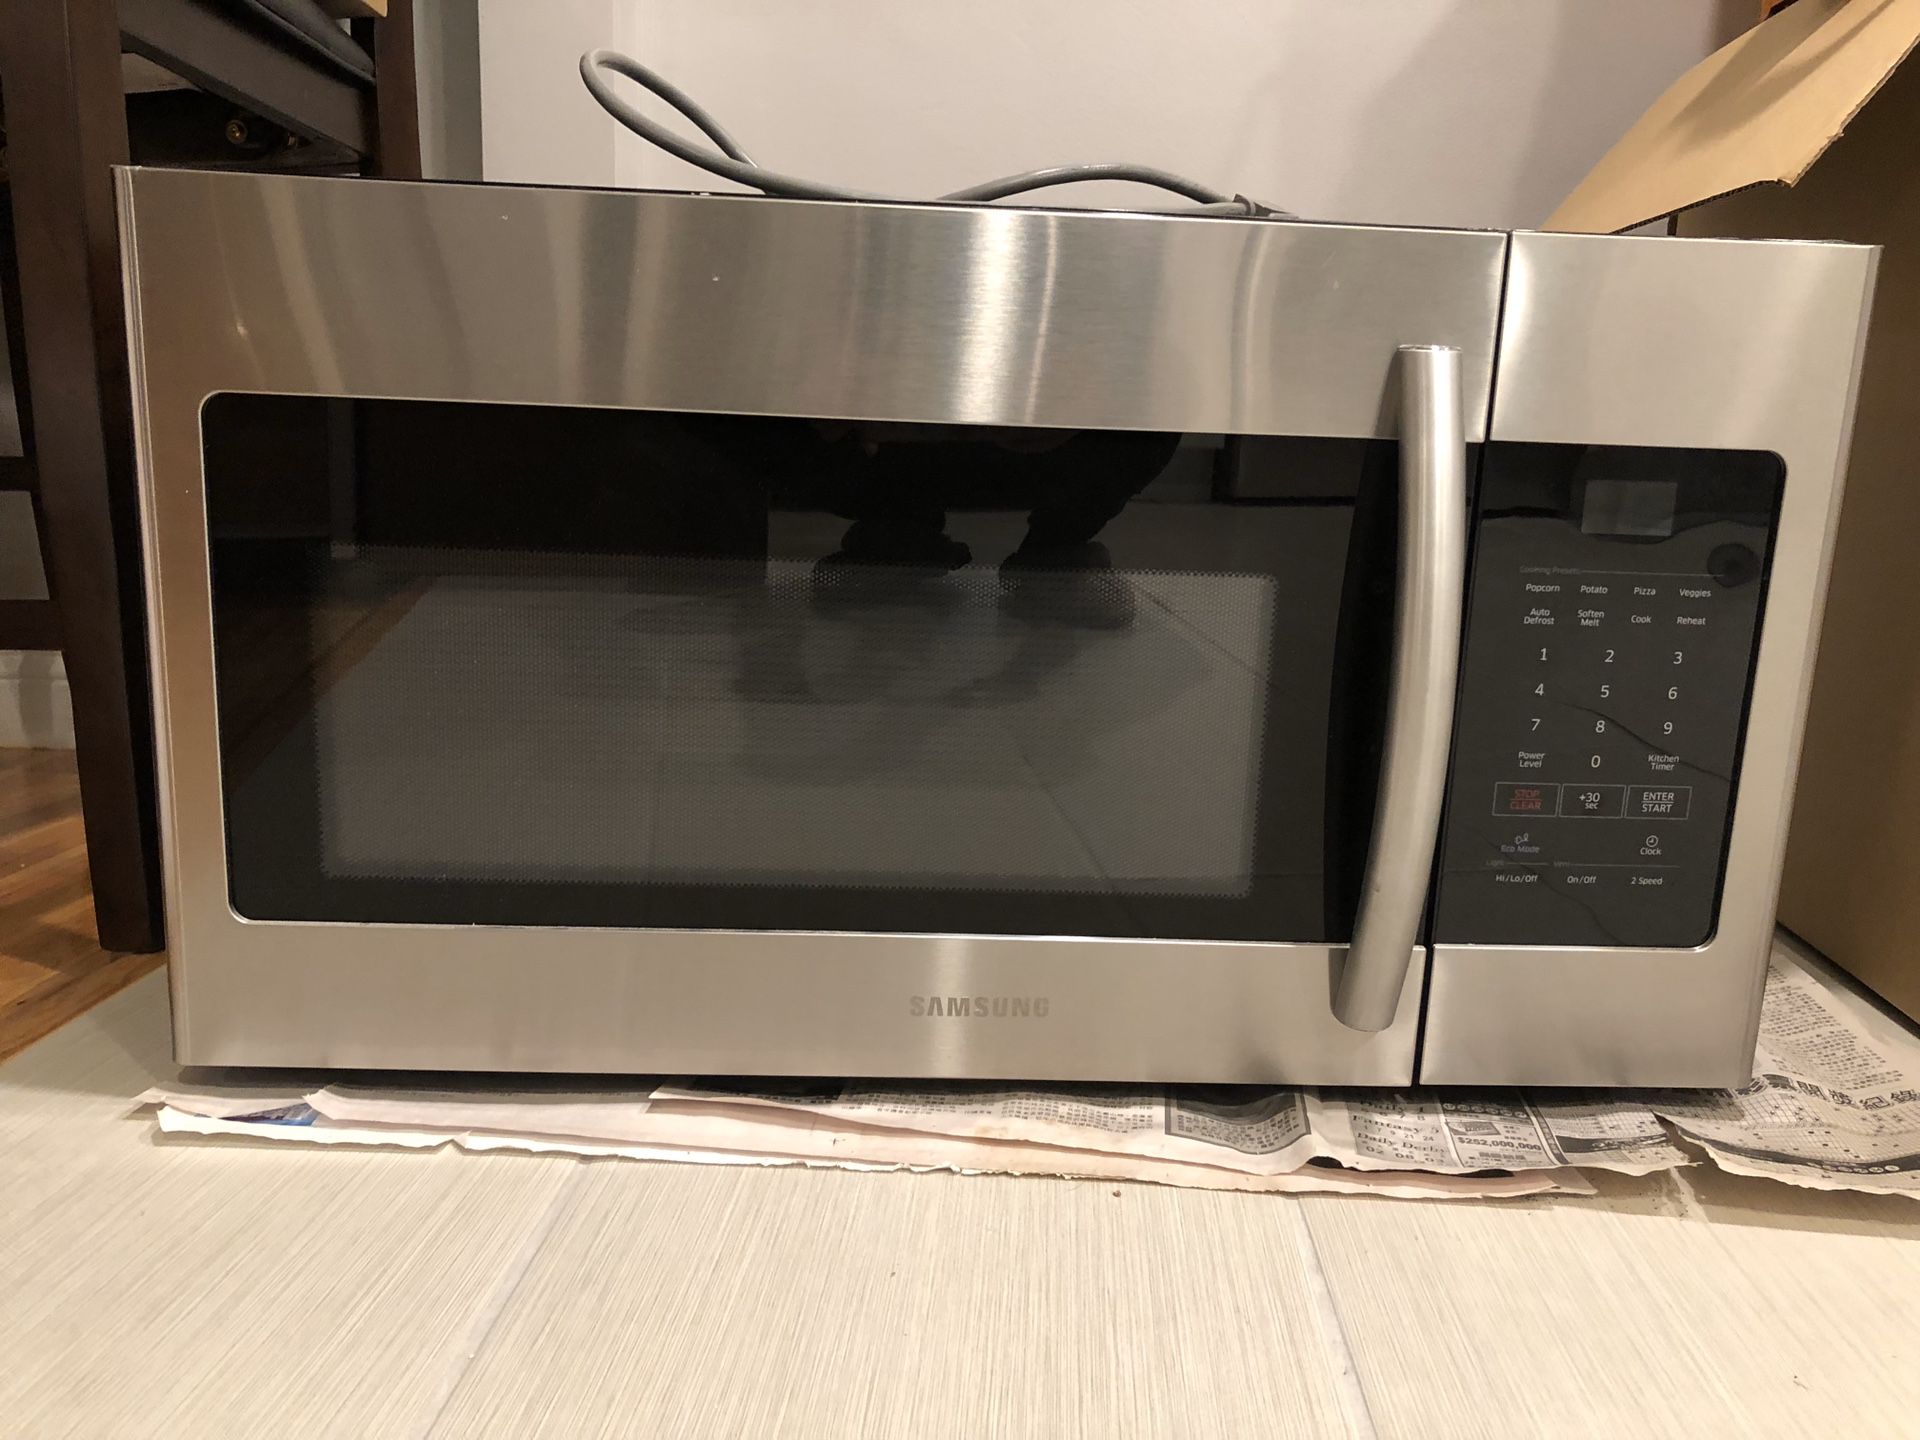 Brand new Samsung over the range microwave